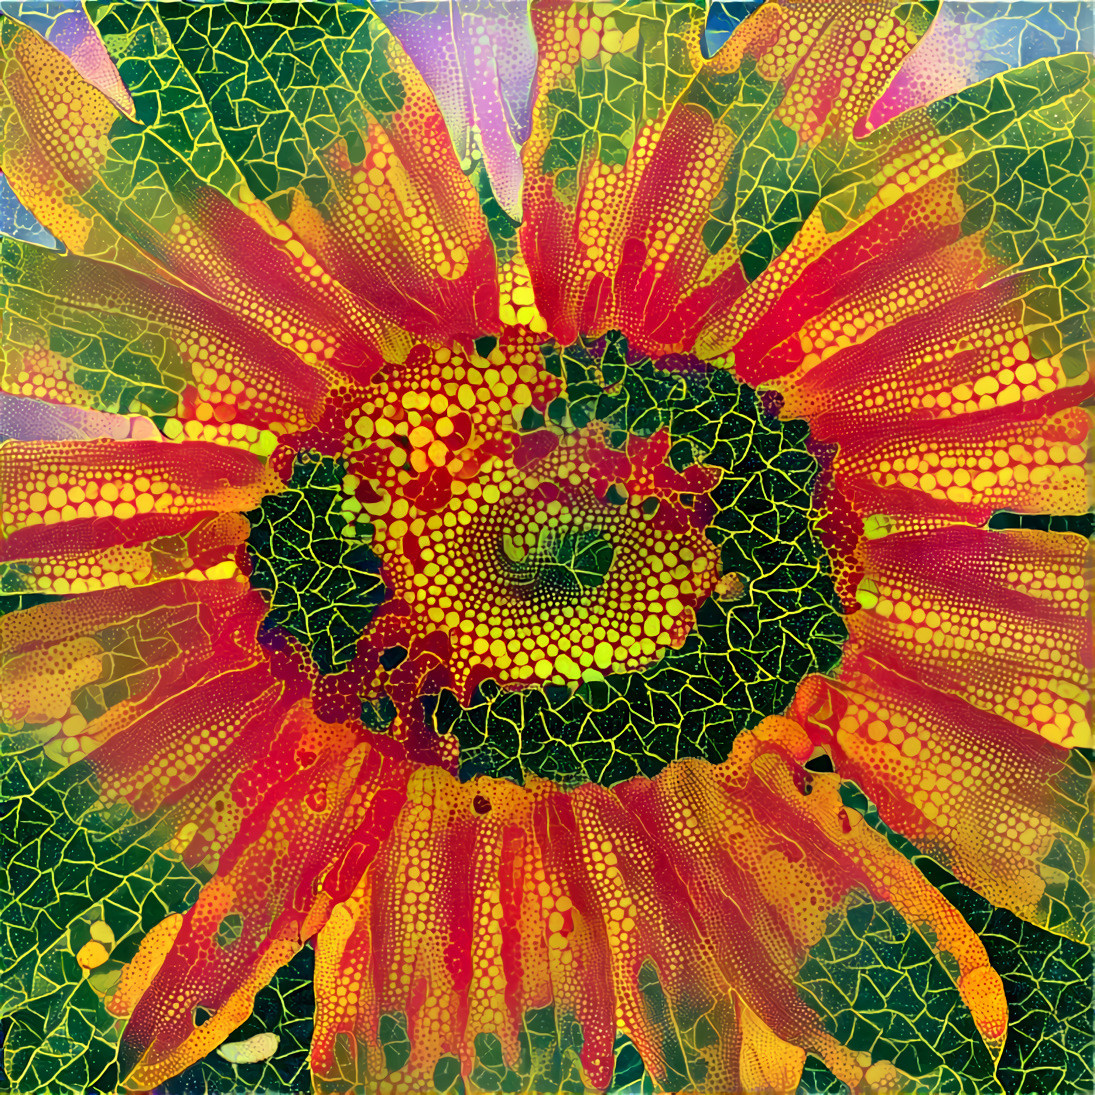 Sun Flower 